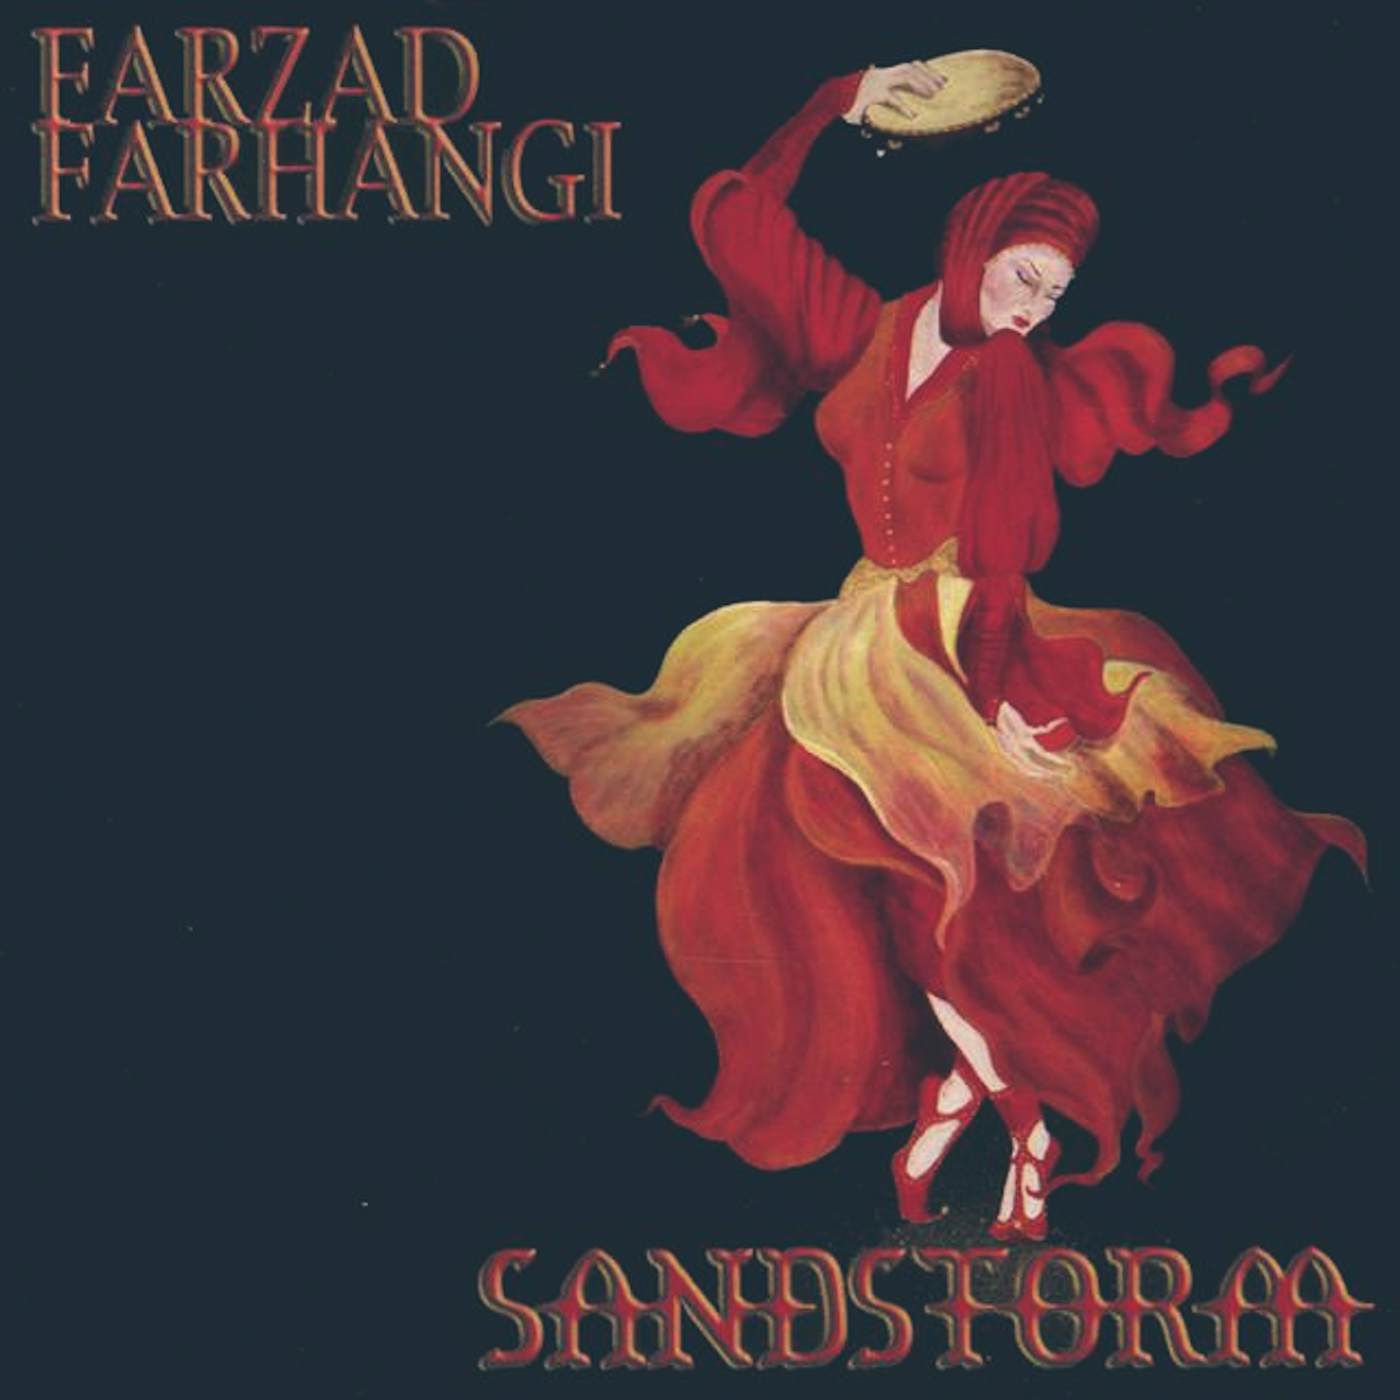 Farzad Farhangi